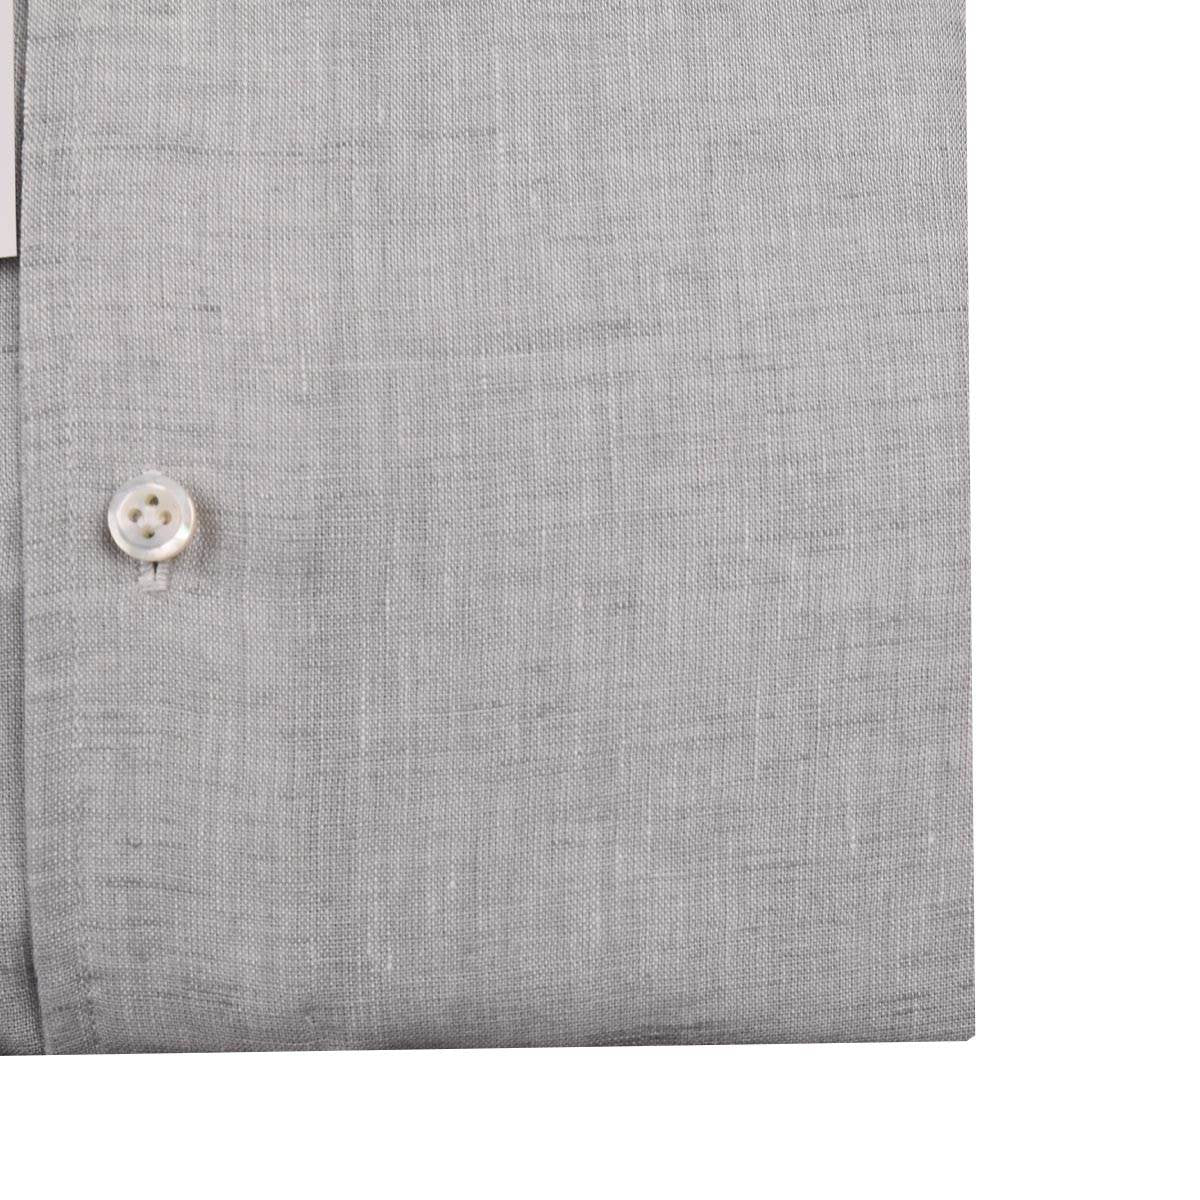 Cesare attolini gray linen shirt